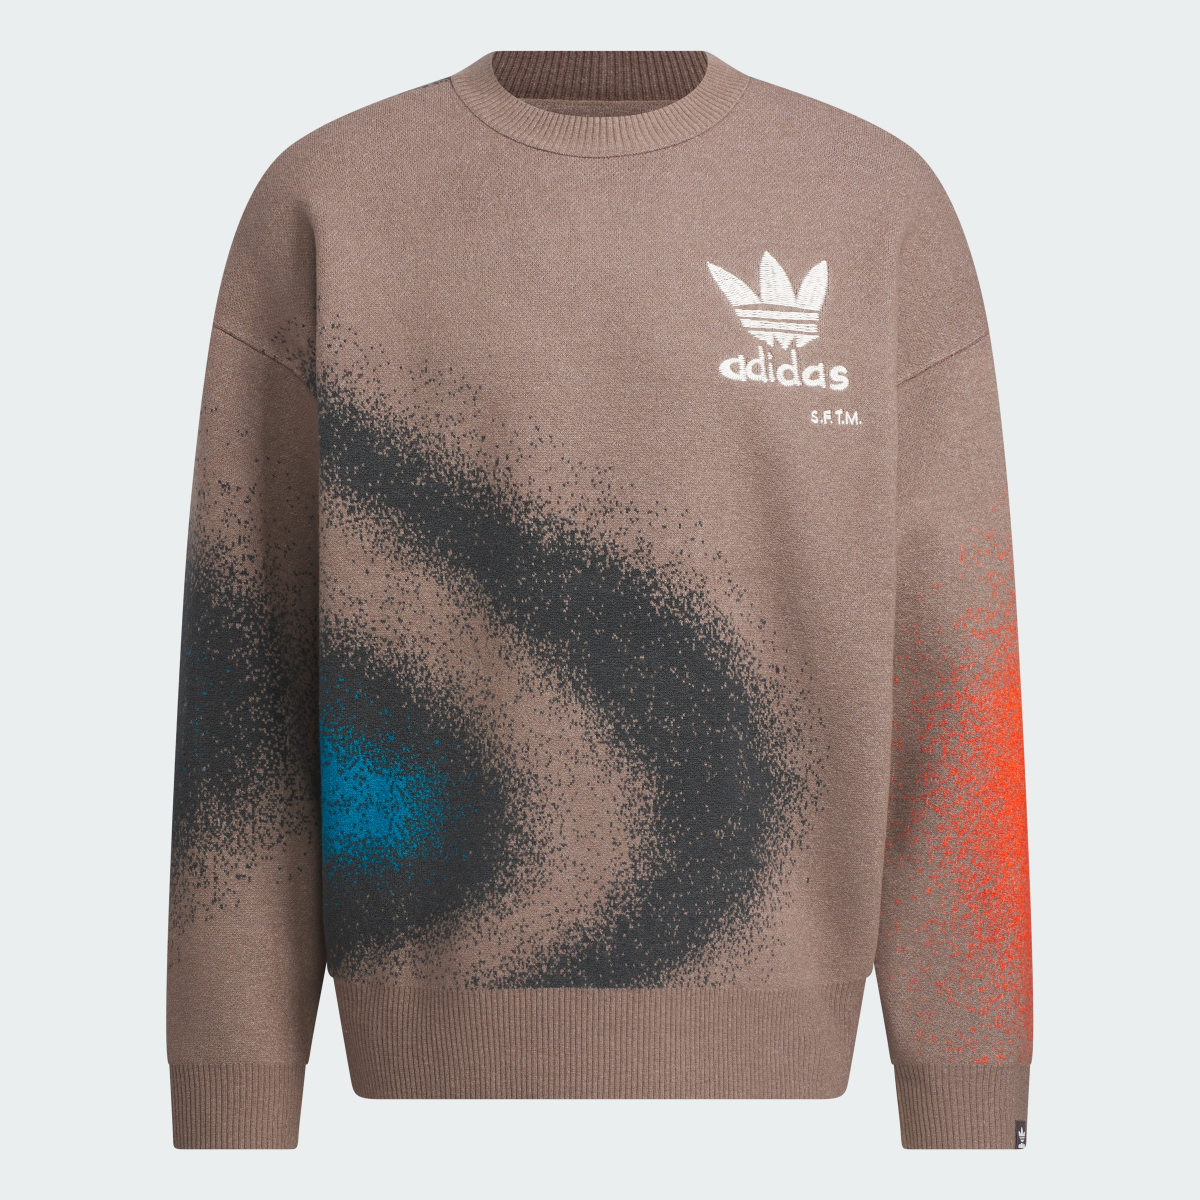 Adidas SFTM Allover Print Sweater (Gender Neutral). 4